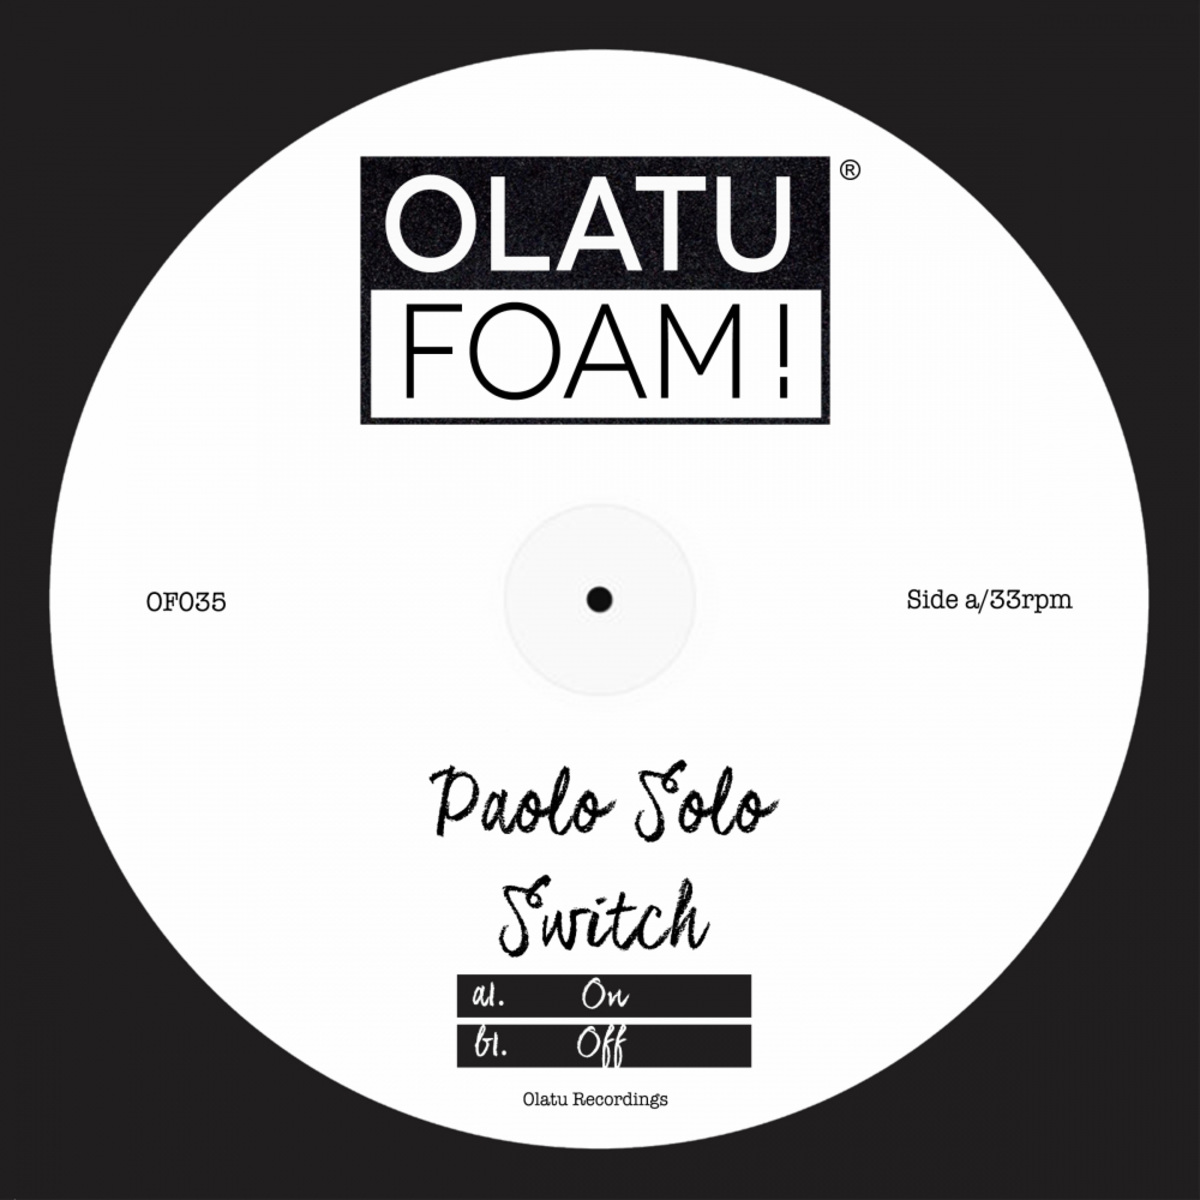 Paolo Solo - Switch / Olatu Foam!